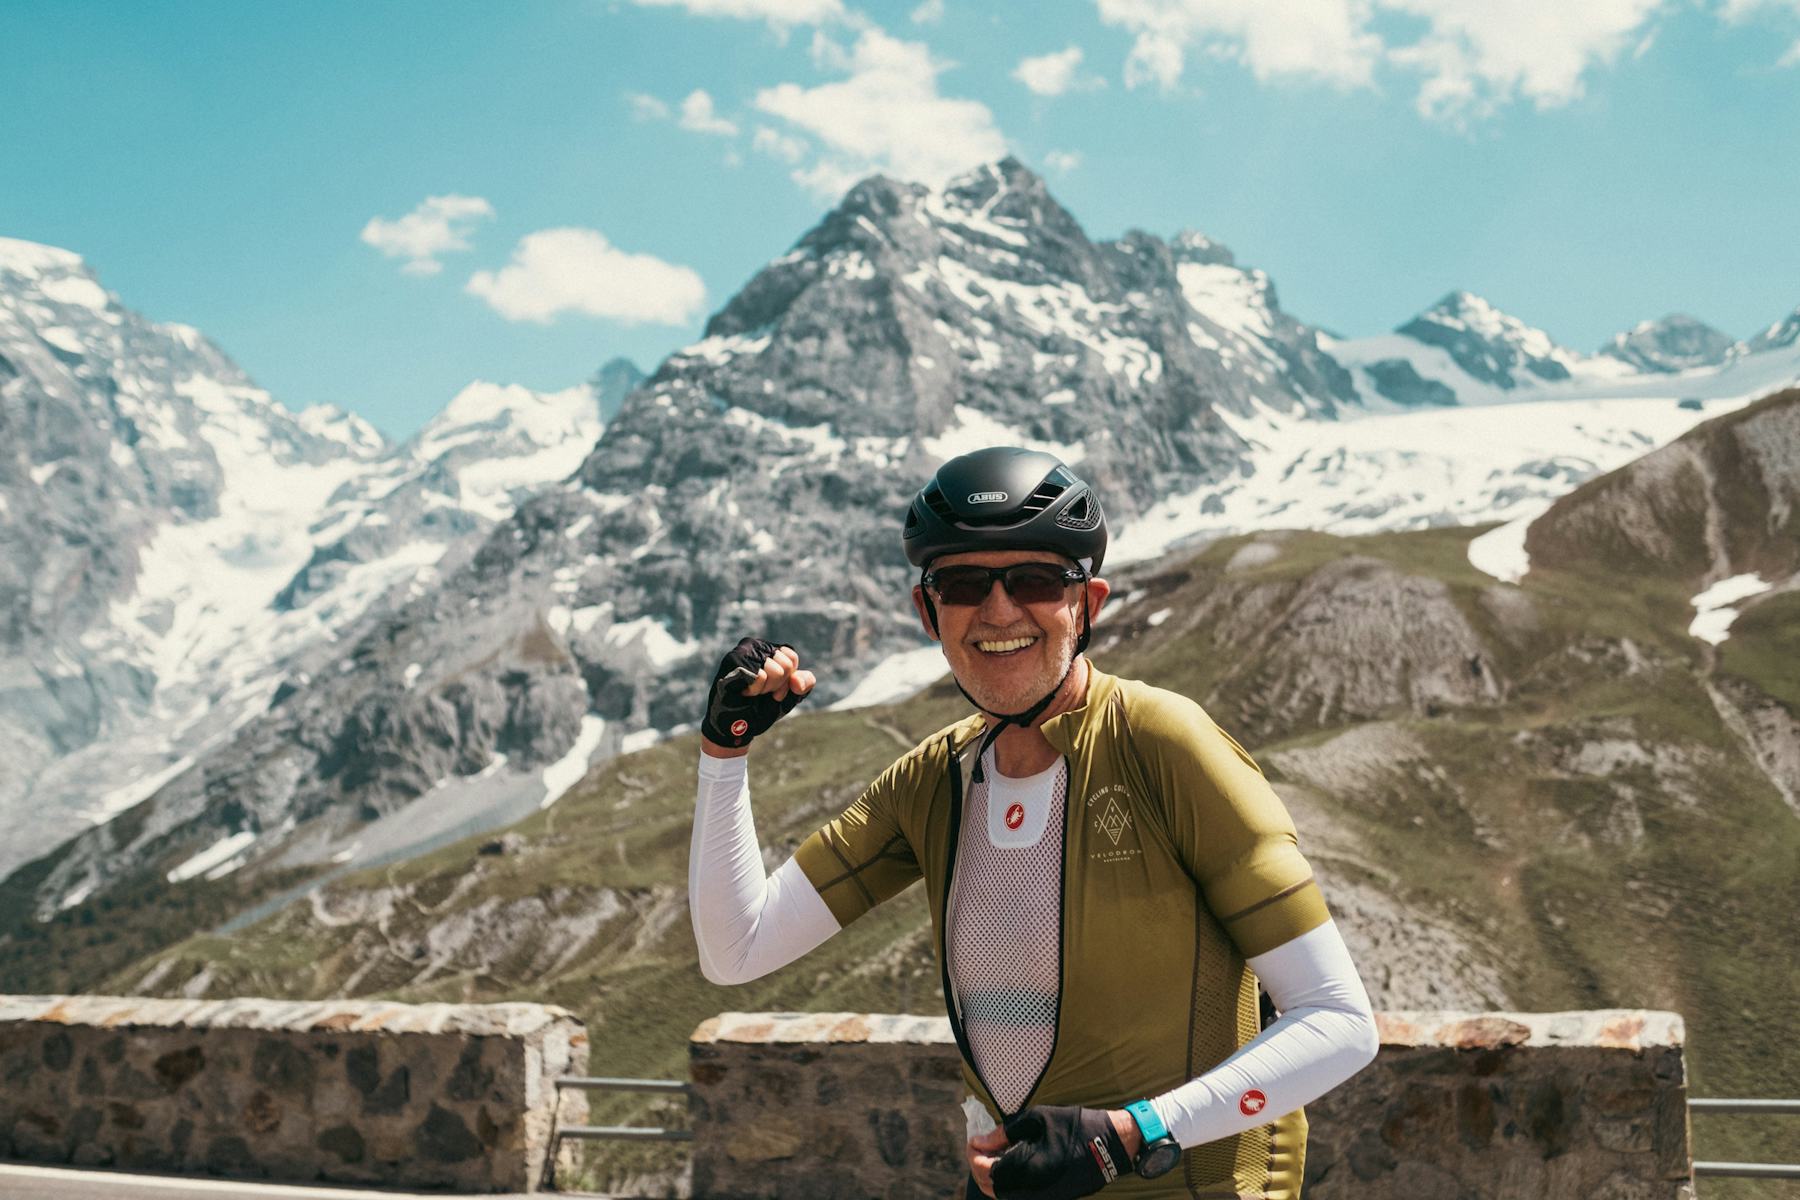 Dolomites Bike Tour Passo Stelvio